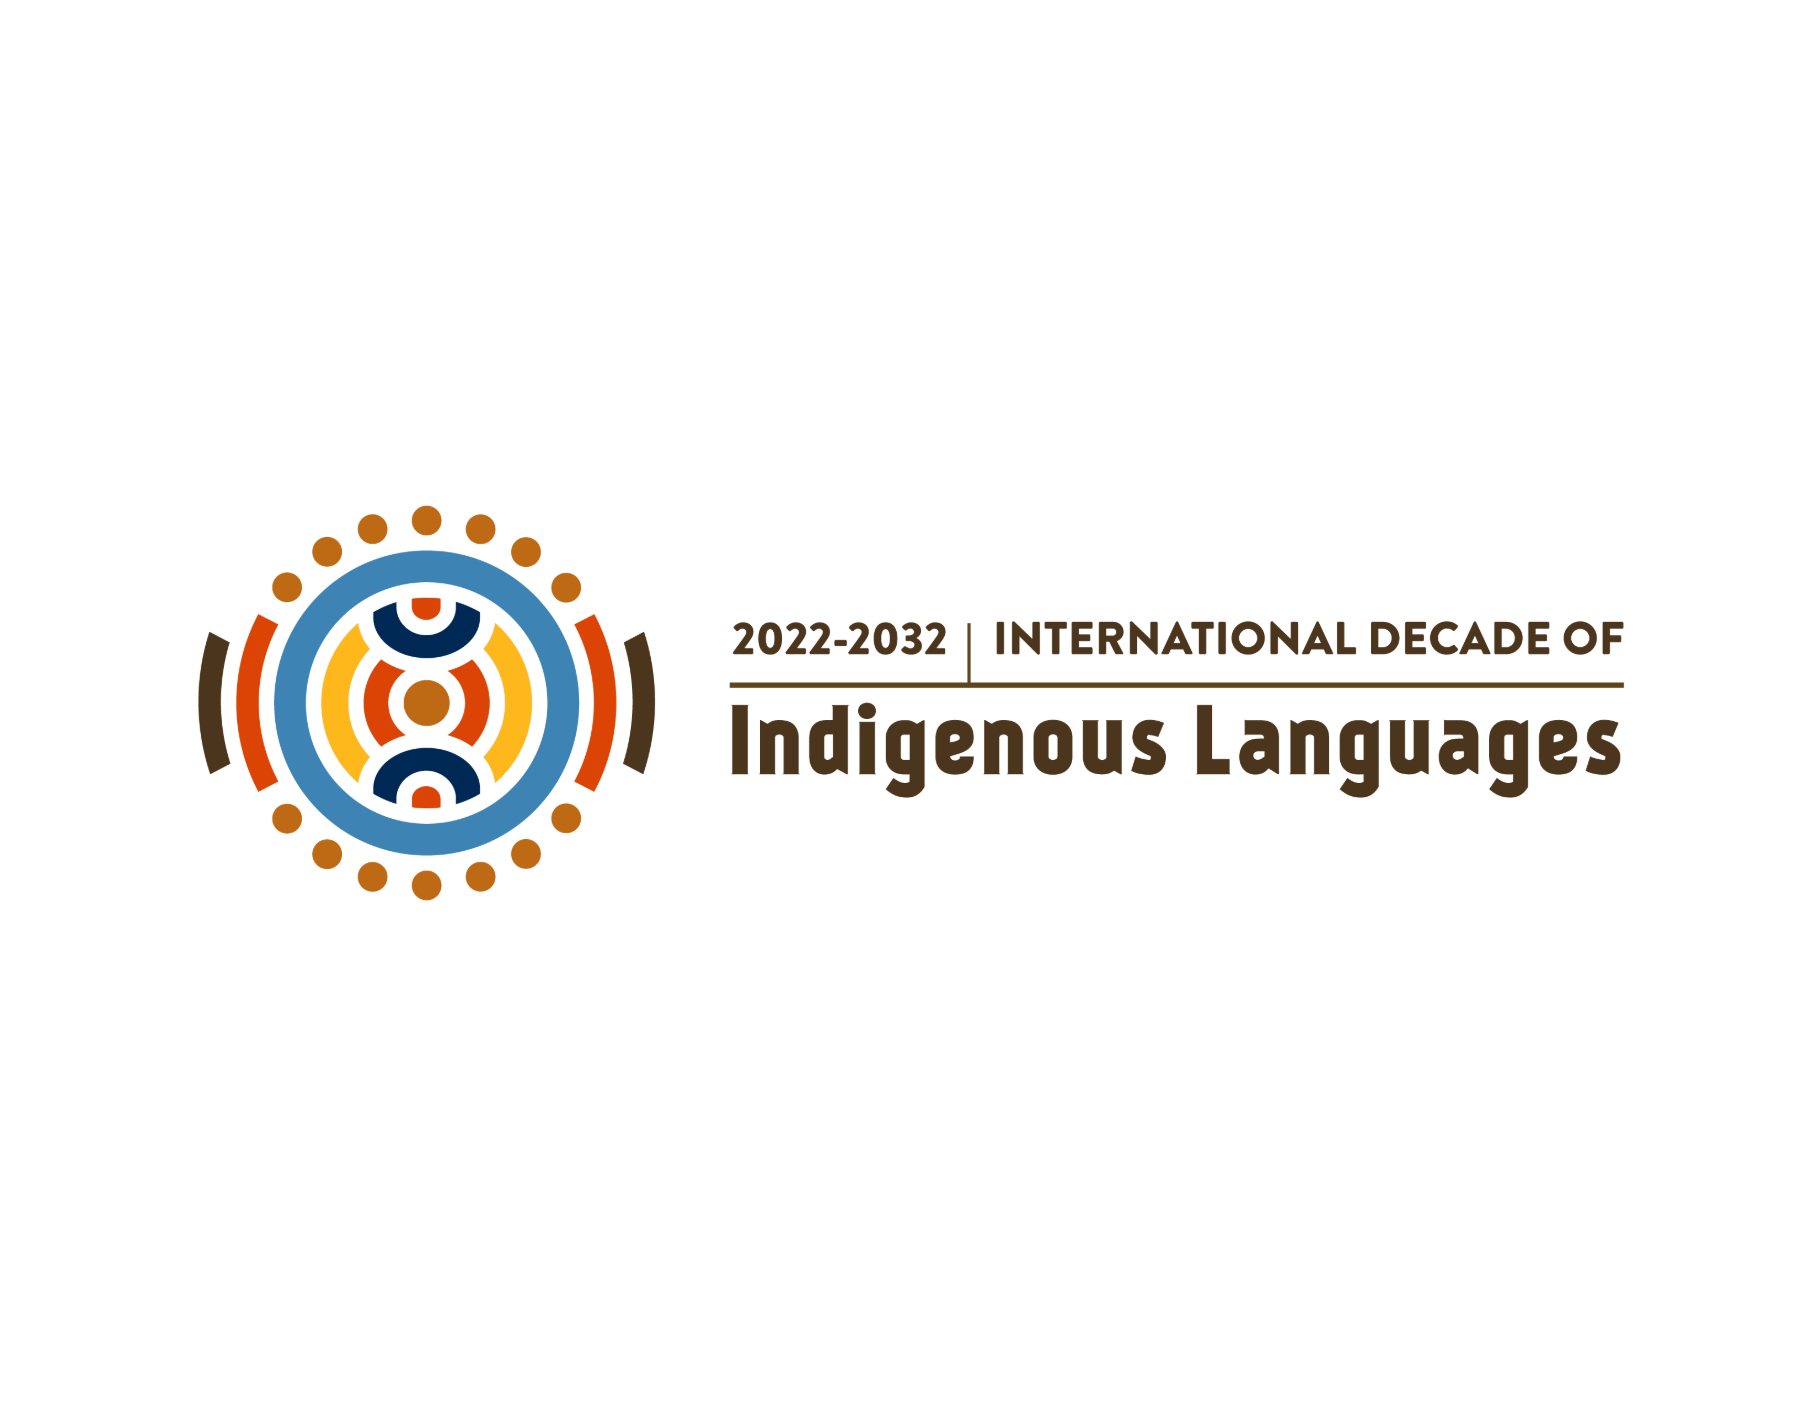 Decade of indigenous languages logo